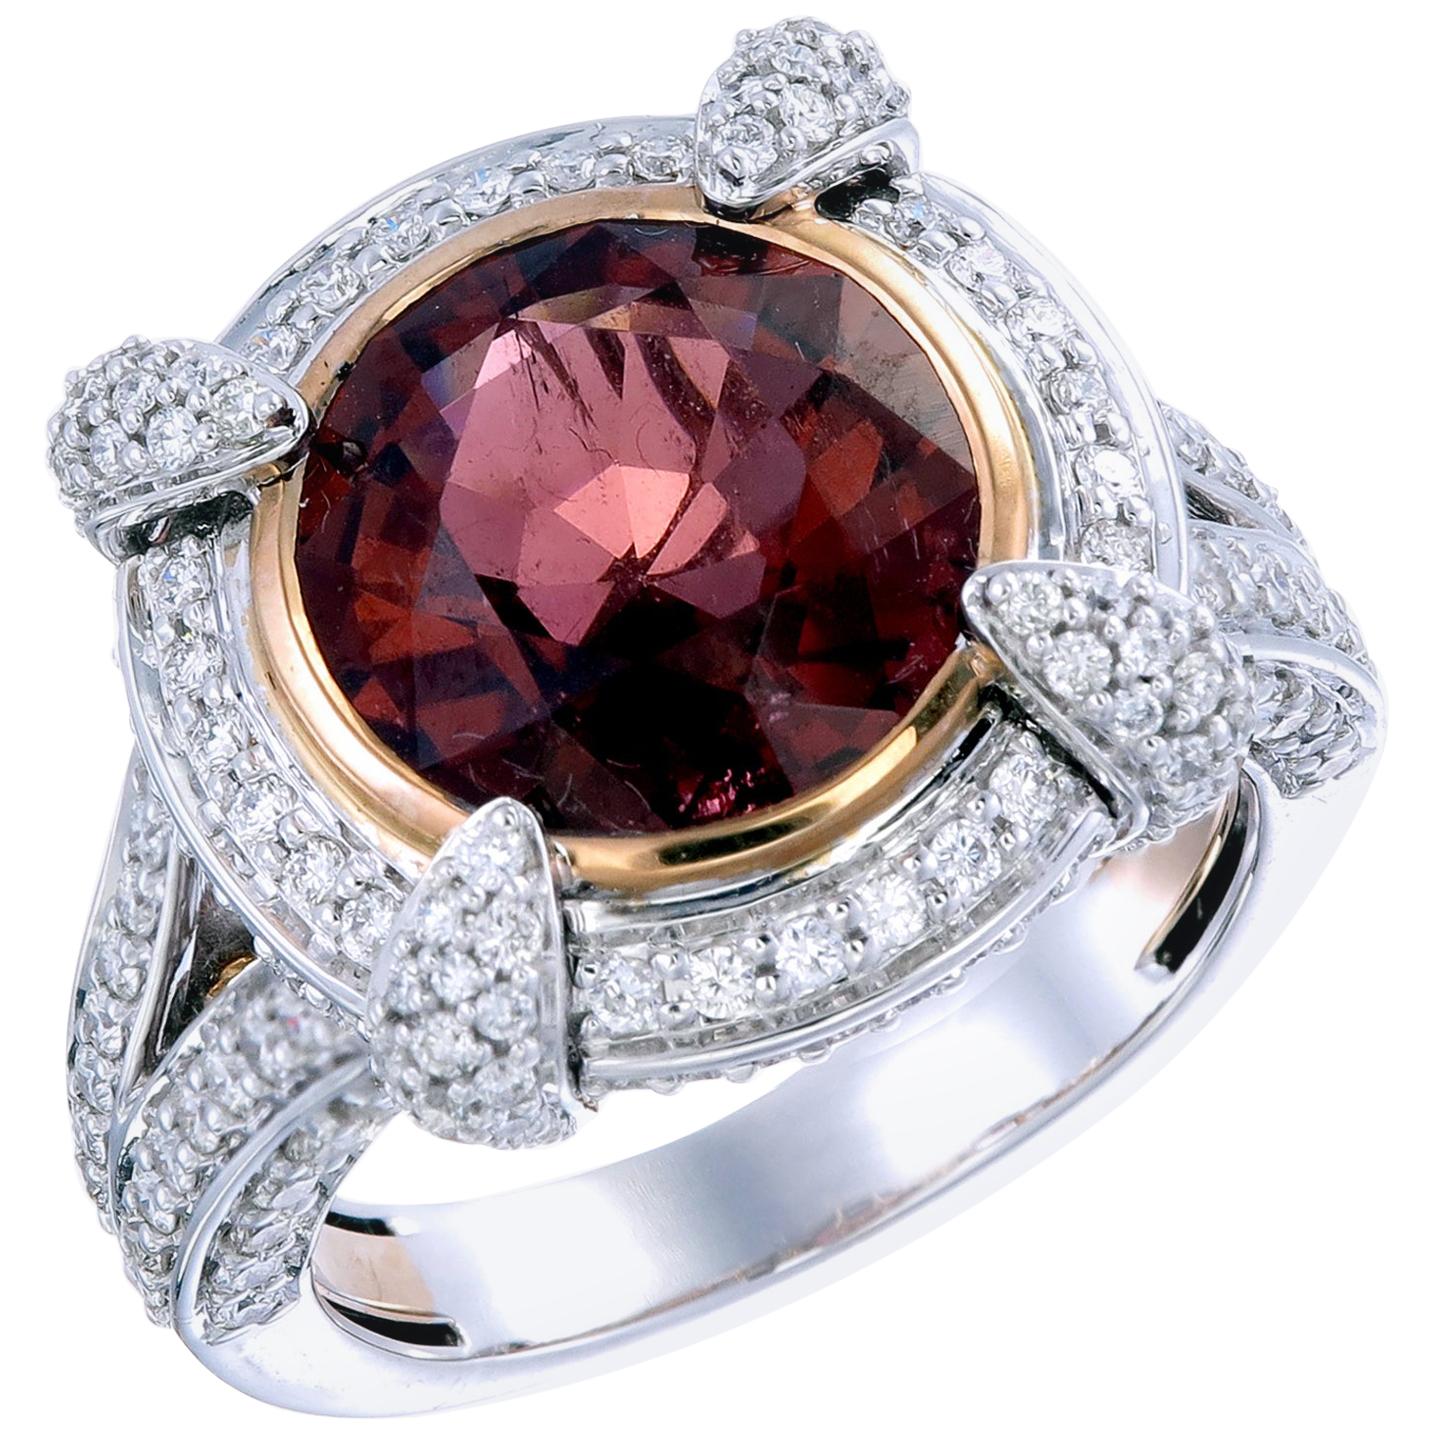 Zorab Creation 4.81 Carat Red Tourmaline and Diamond Sangria Ring